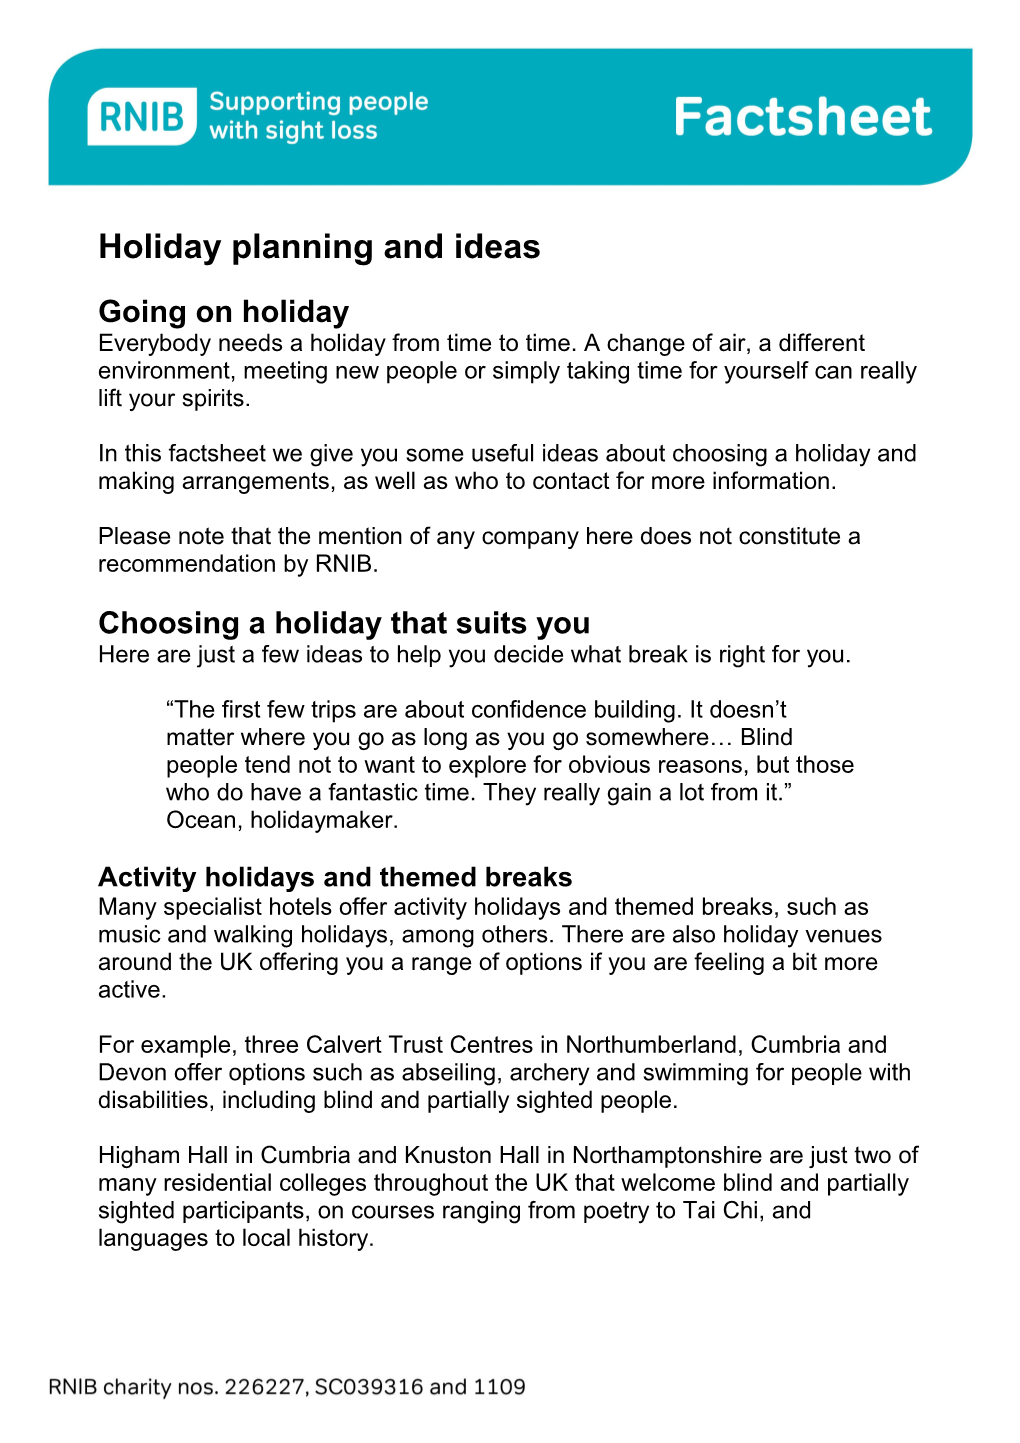 Holidays - Planning and Ideas Factsheet